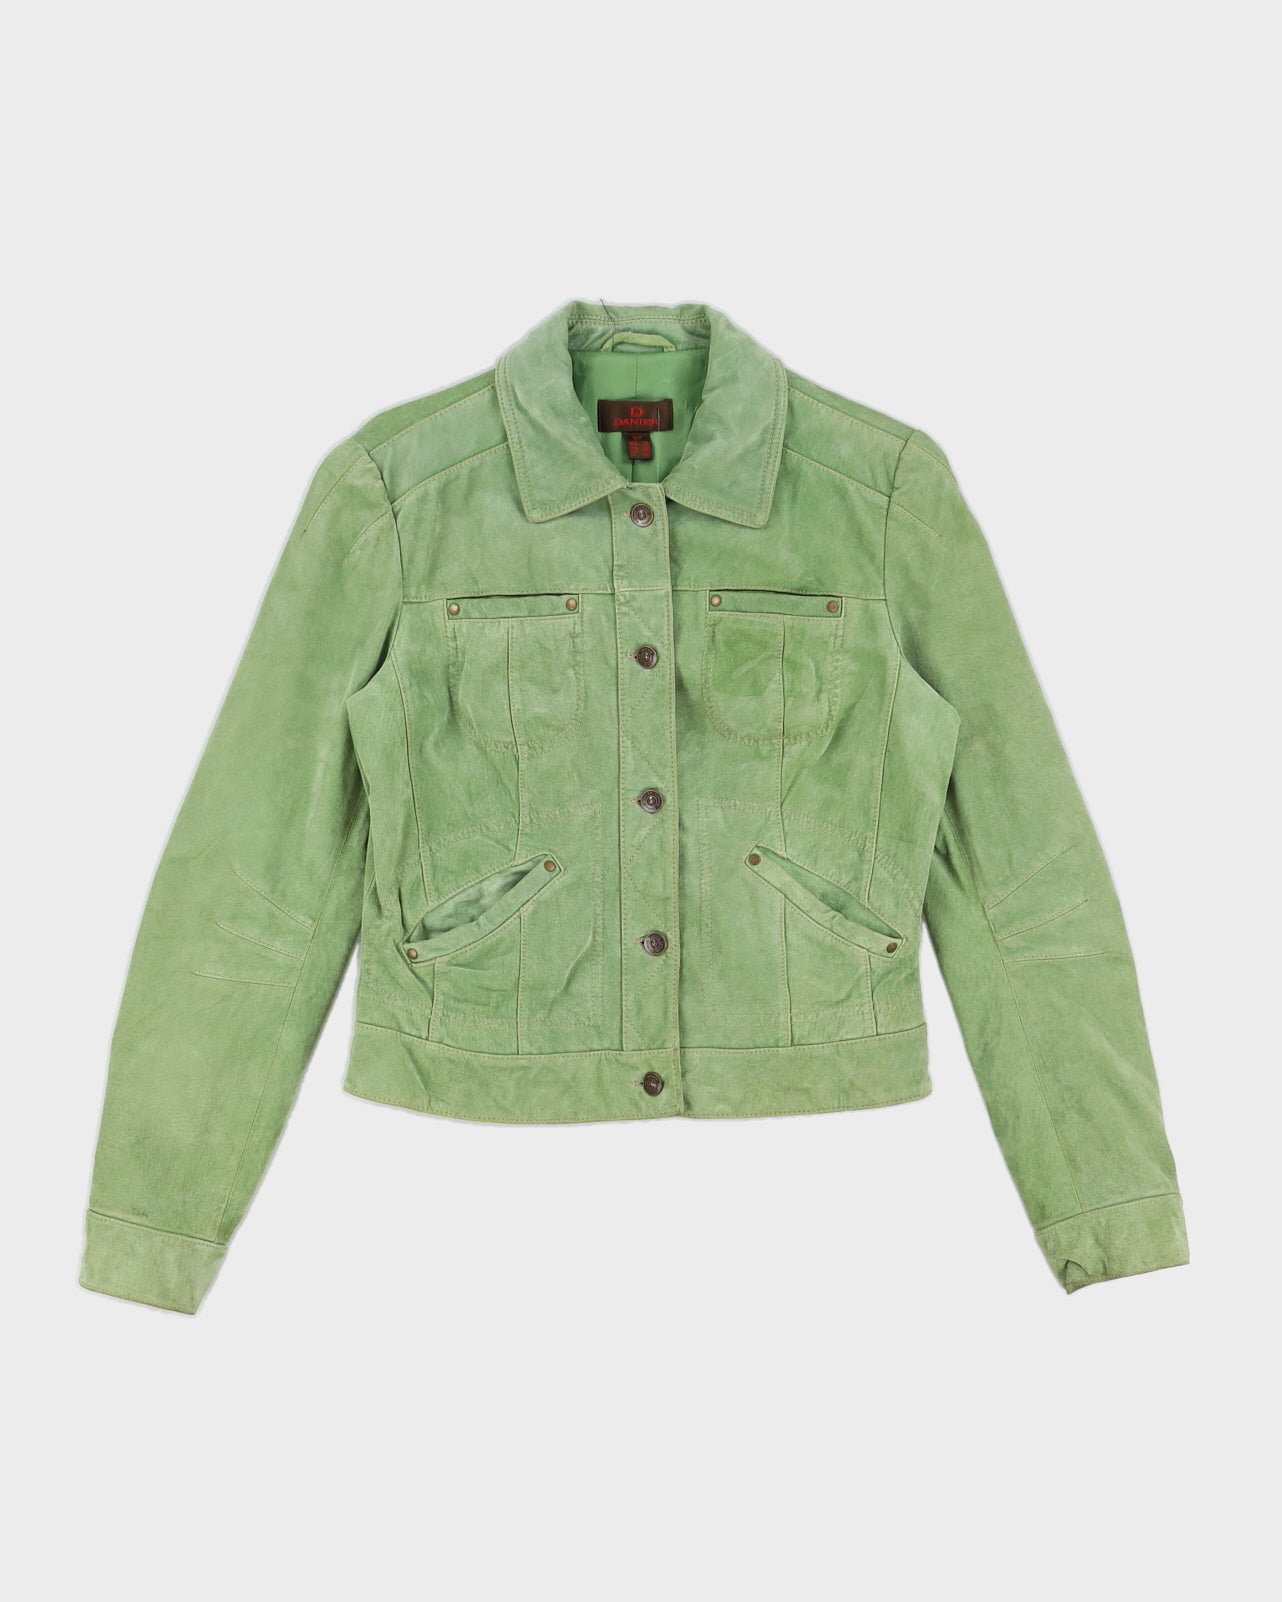 Vintage 90s Danier Women's Green Suede Jacket - S/M